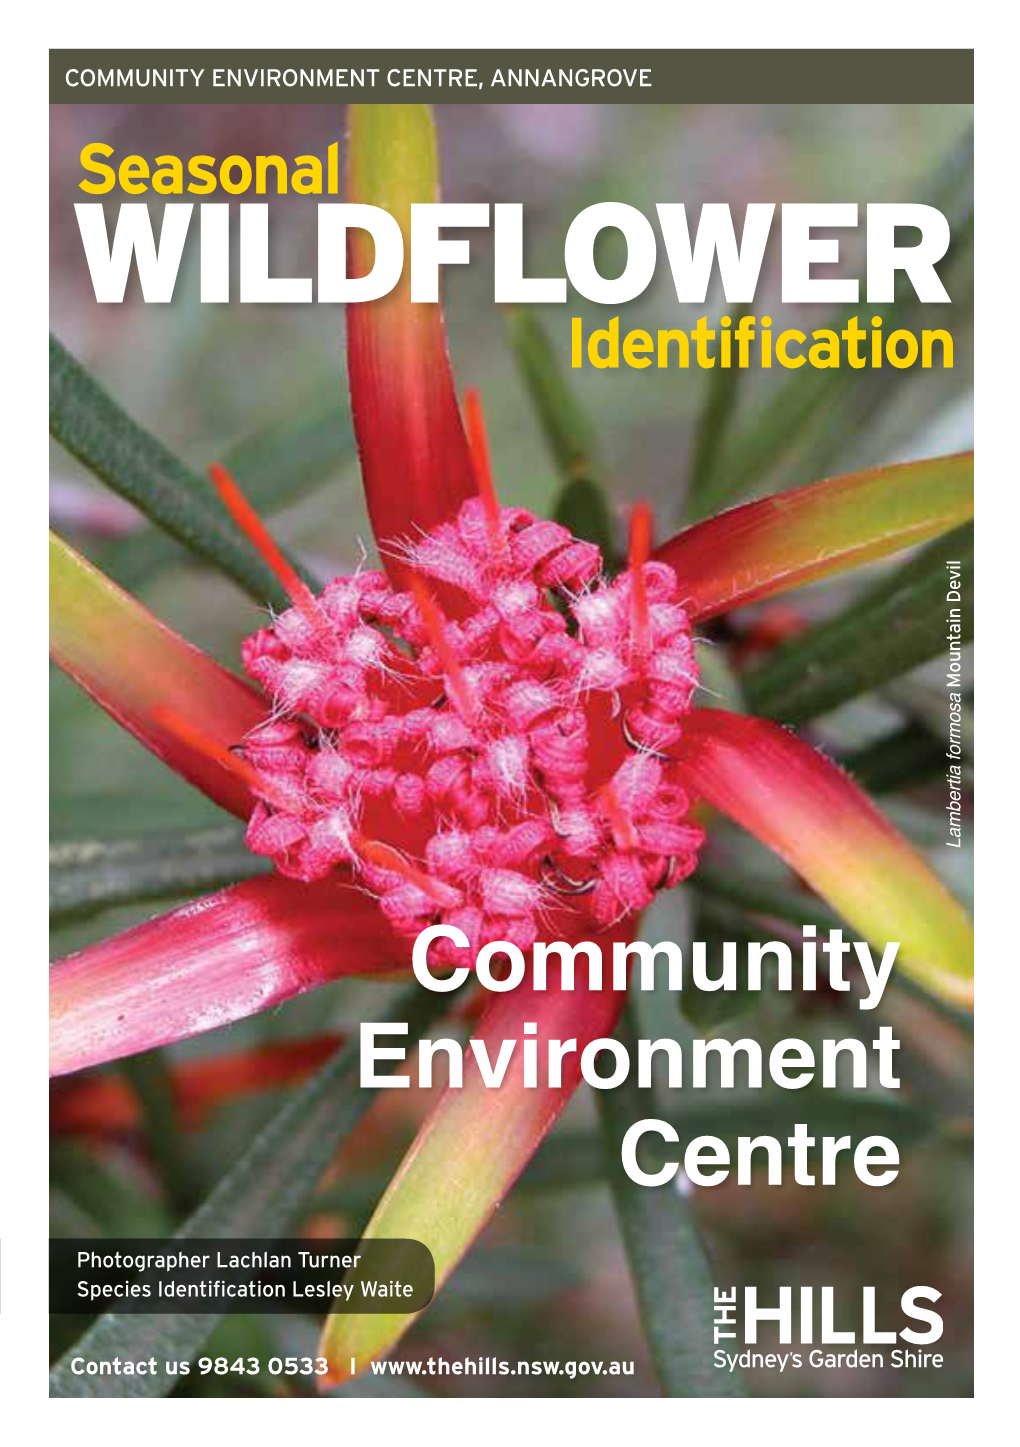 Community Environment Centre Seasonal Wildflower Identification